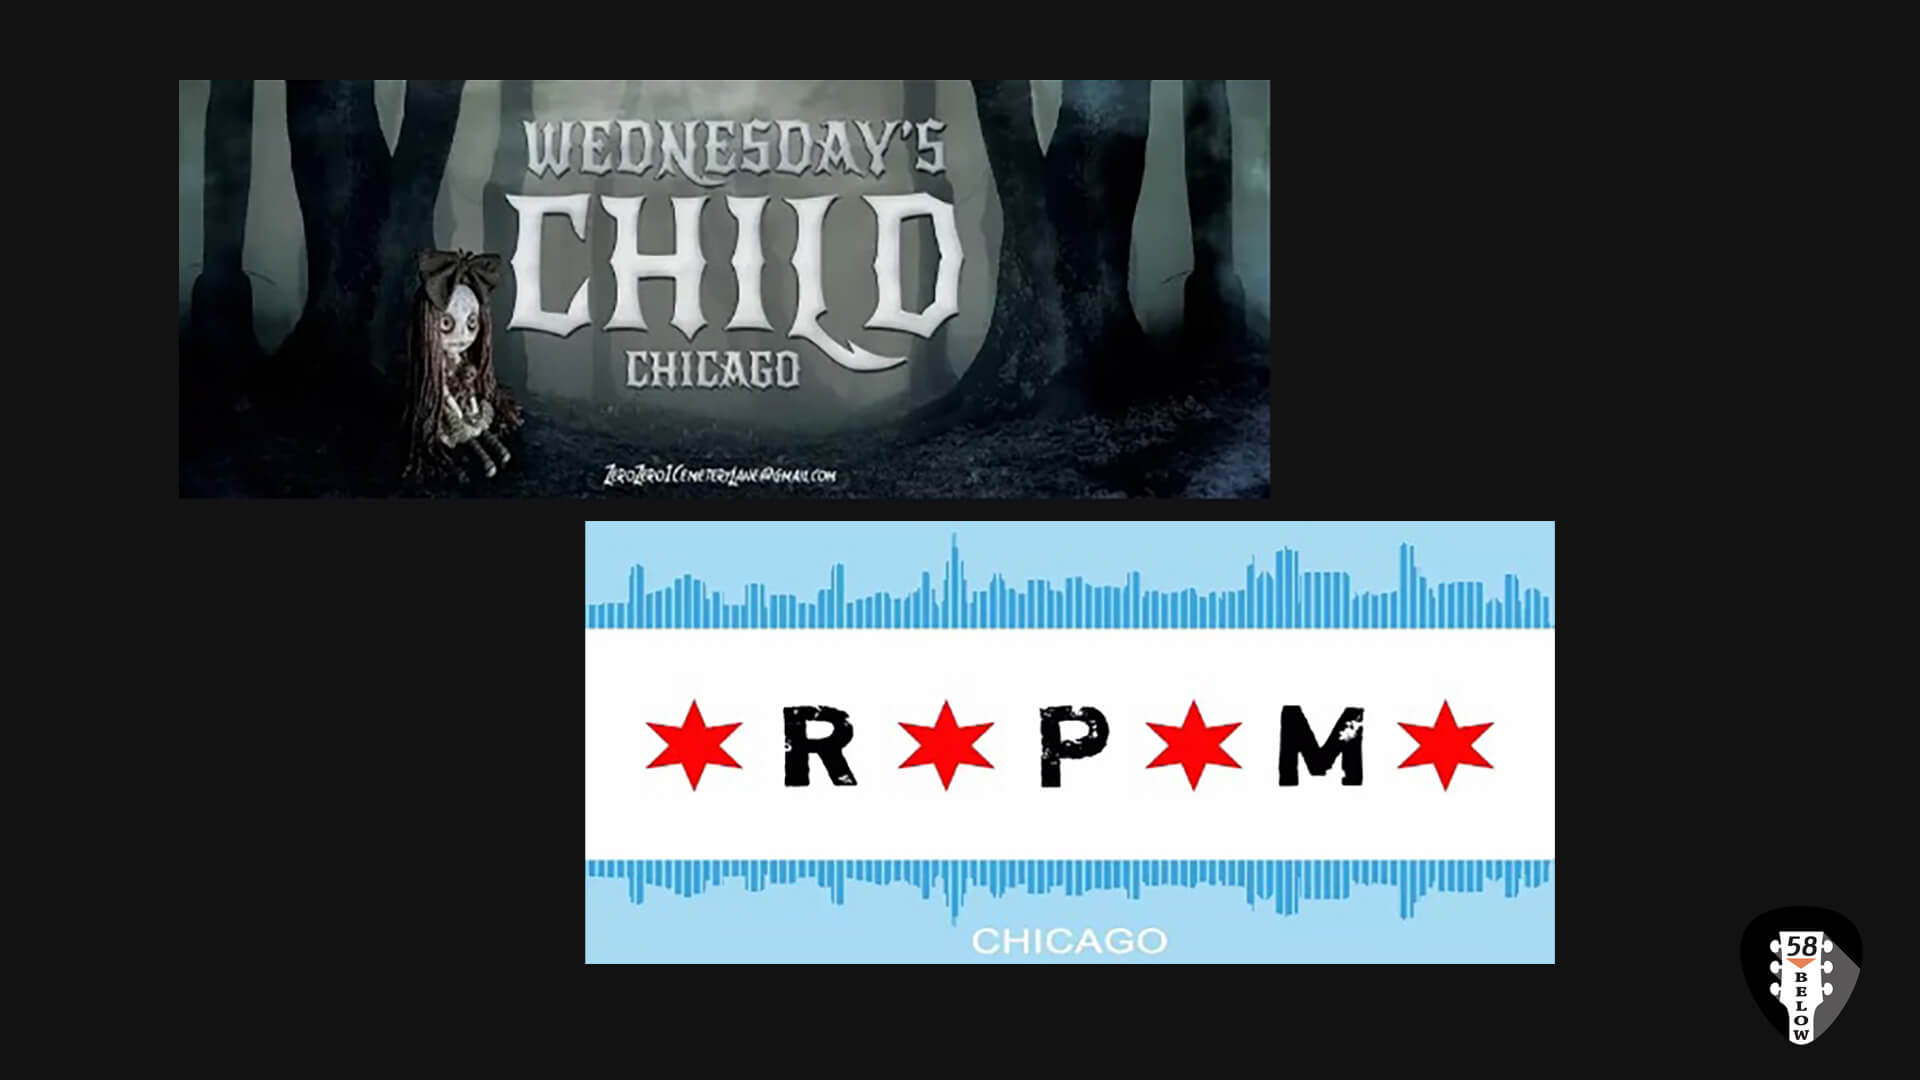 Wednesdays Child Chicago and RPM Chicago at 58 Below